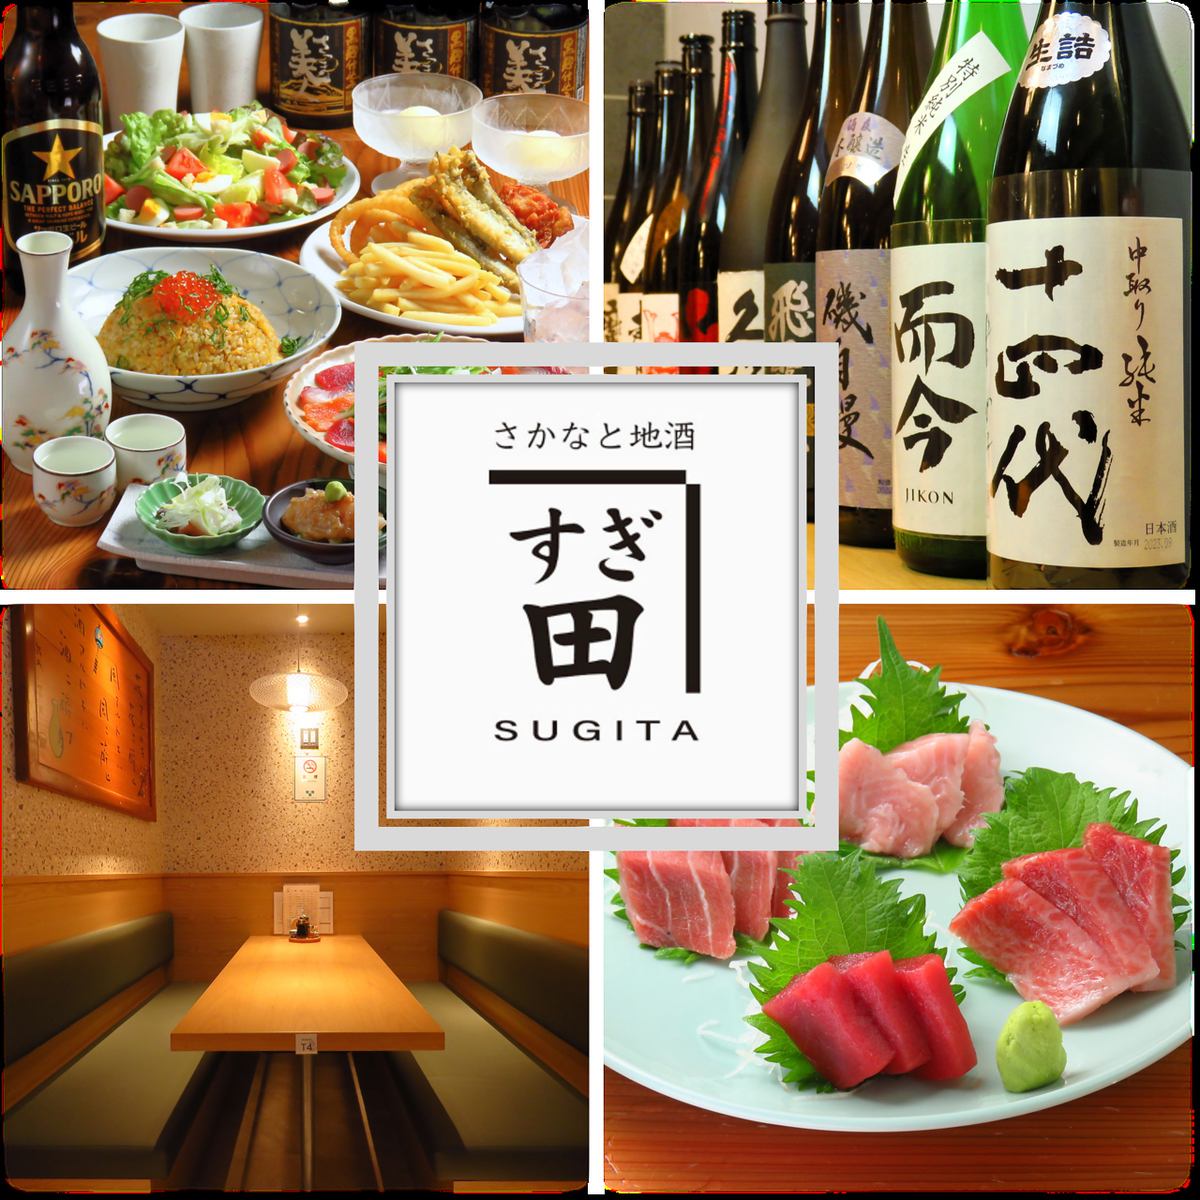 ◇◆~Seafood izakaya in Monzennakacho◎Enjoy the local sake and side dishes~◆◇